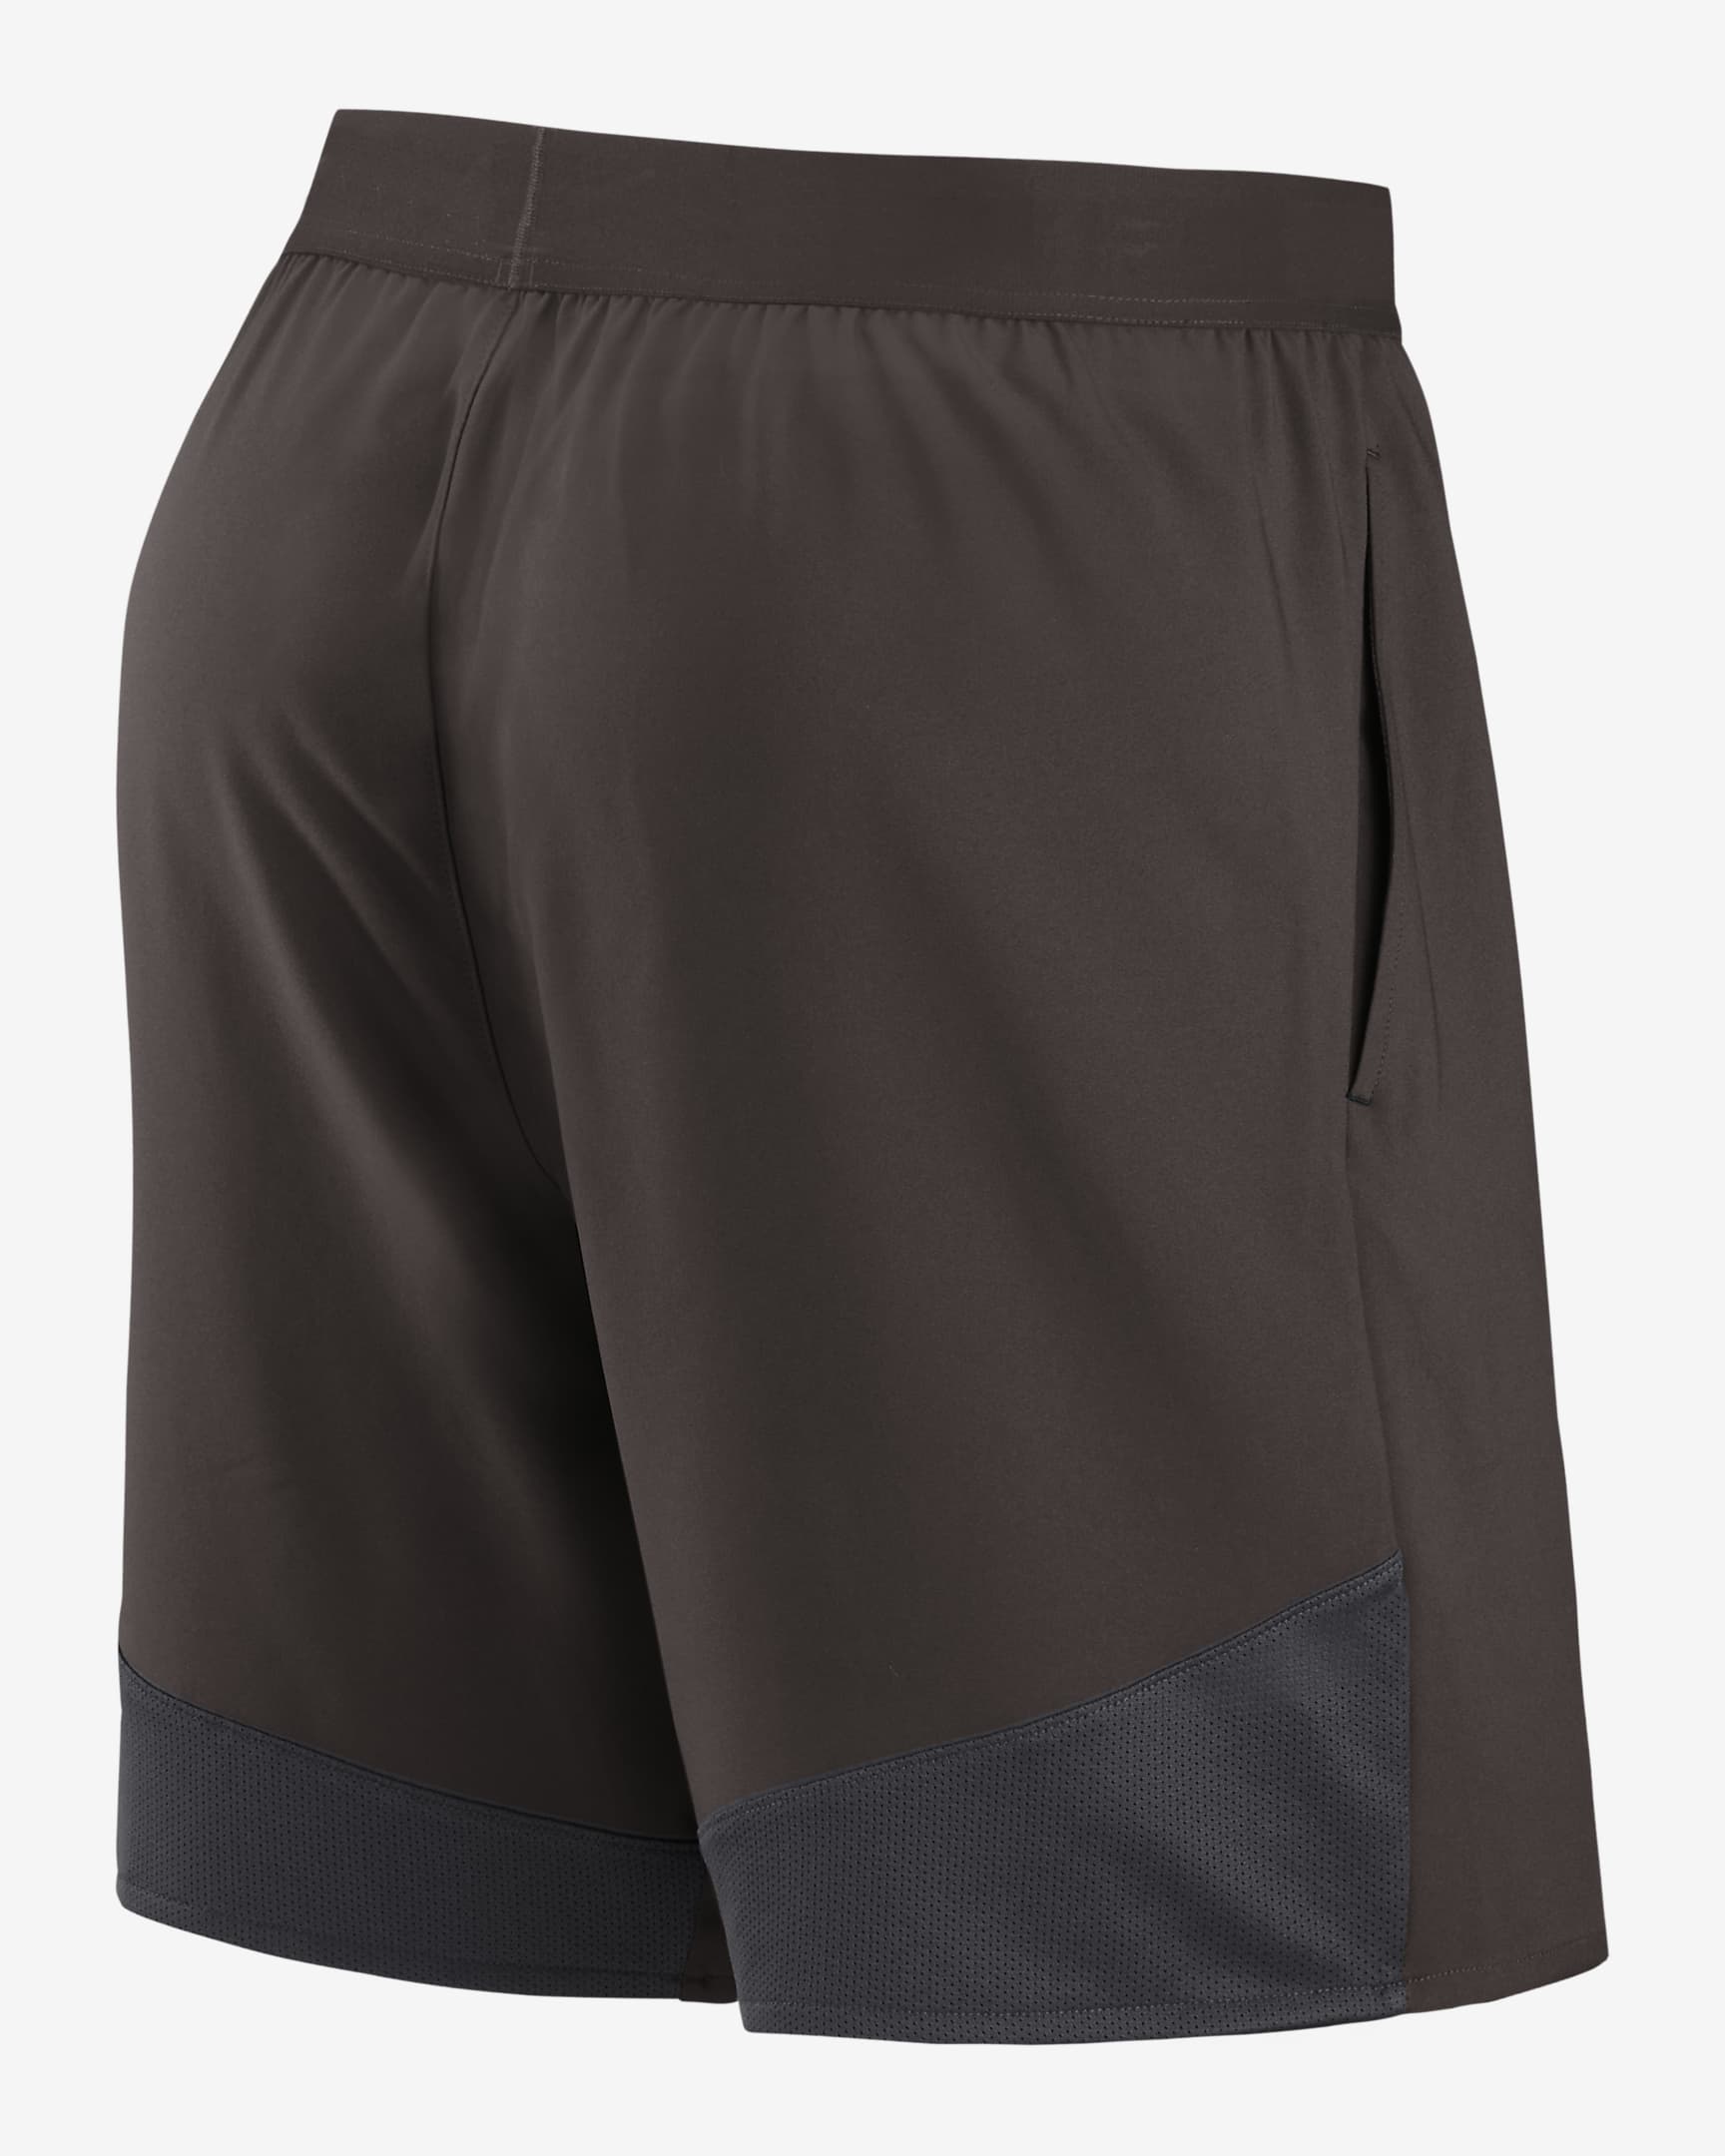 Nike Dri-FIT Stretch (NFL Cleveland Browns) Men's Shorts. Nike.com